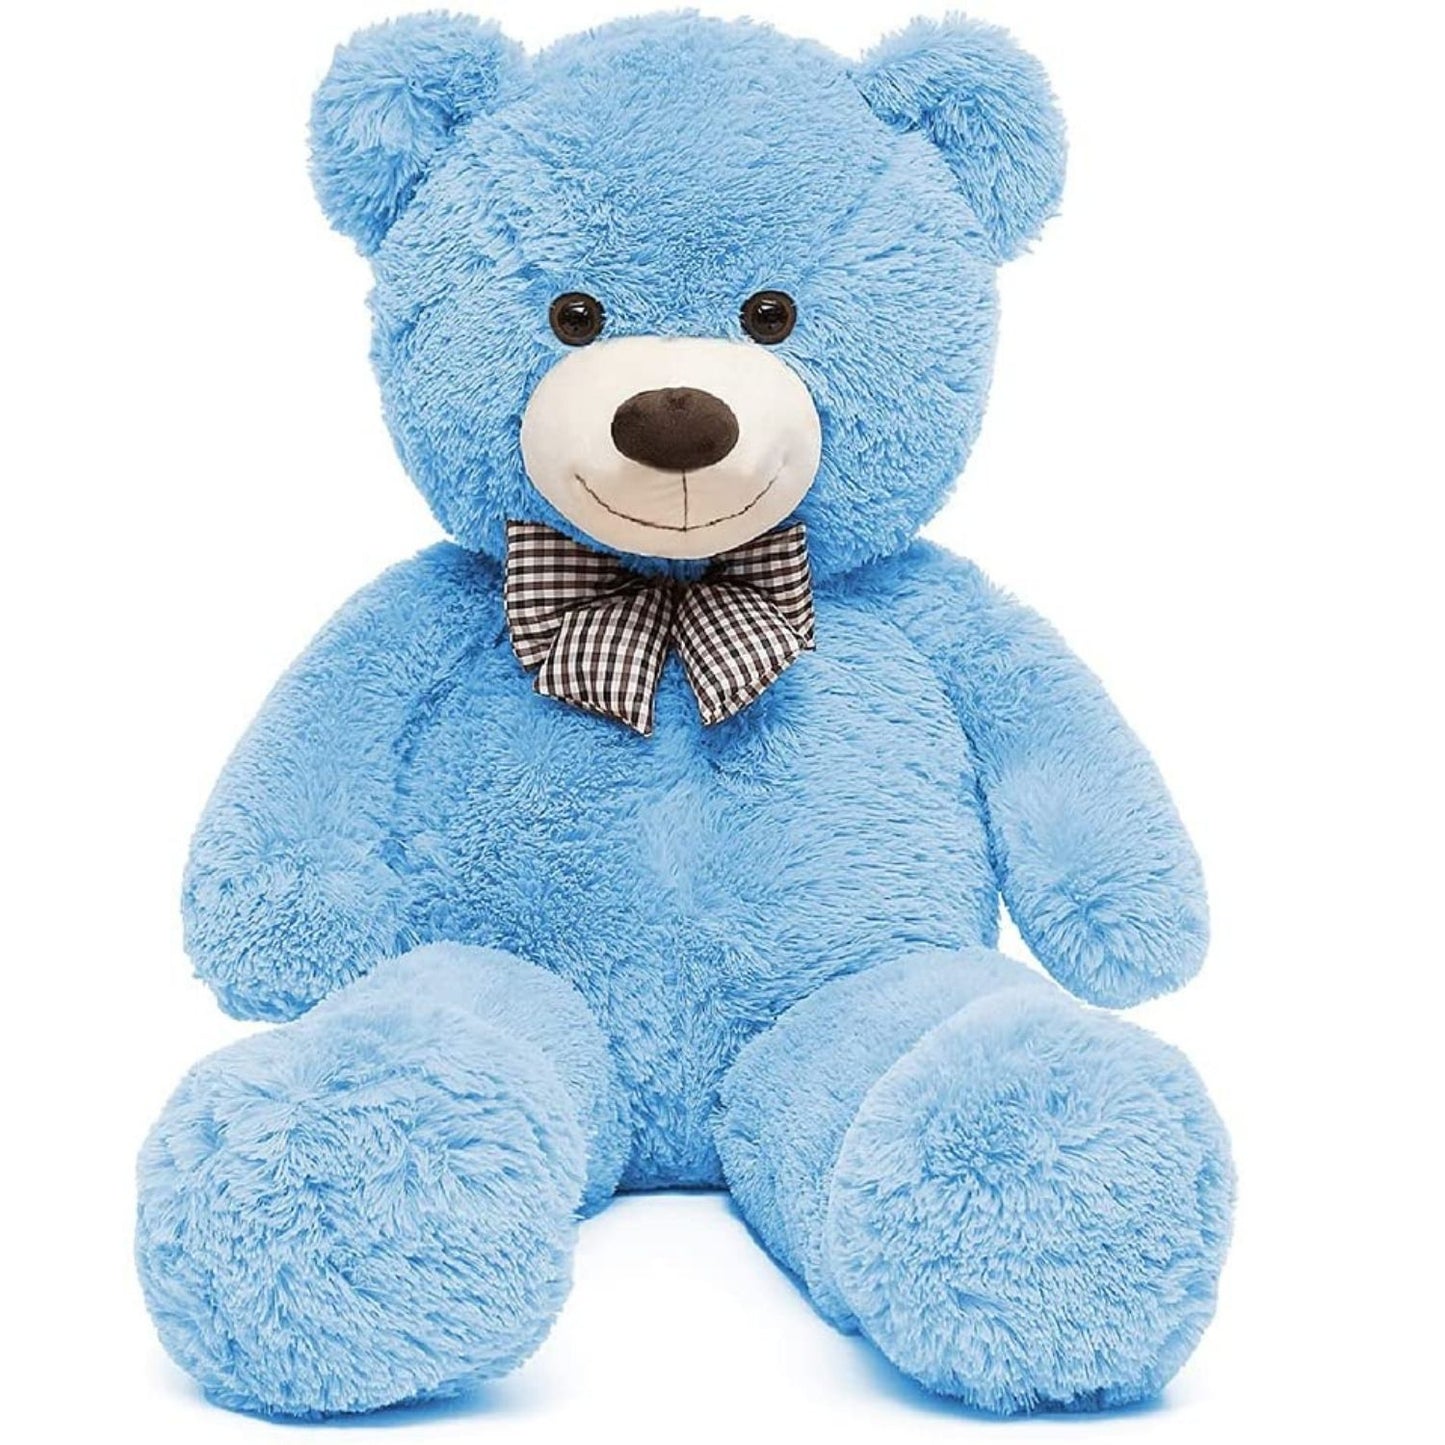 Giant Teddy Bear Stuffed Toy, Blue, 39/47/55 Inches - MorisMos Plush Toys